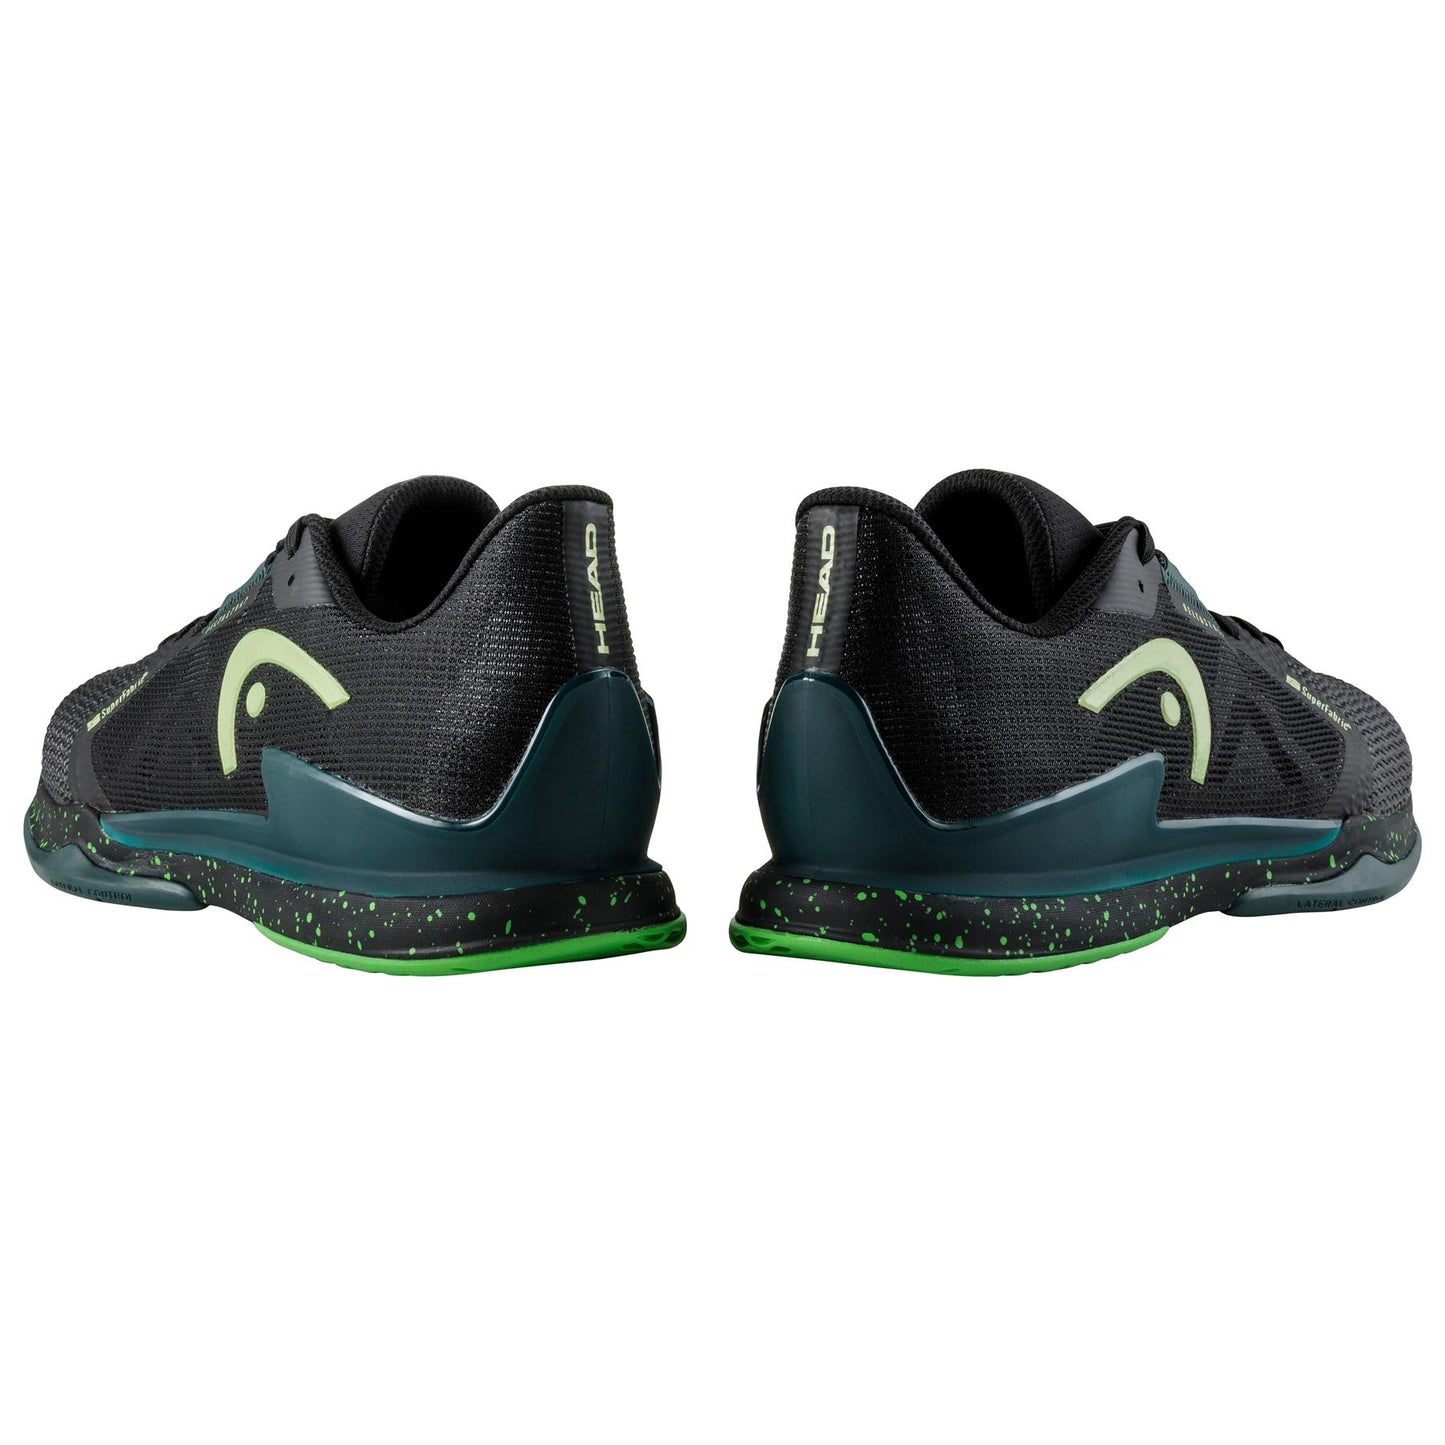 HEAD Sprint Pro SF Mens Tennis Shoes - Black / Forest Green - Pair